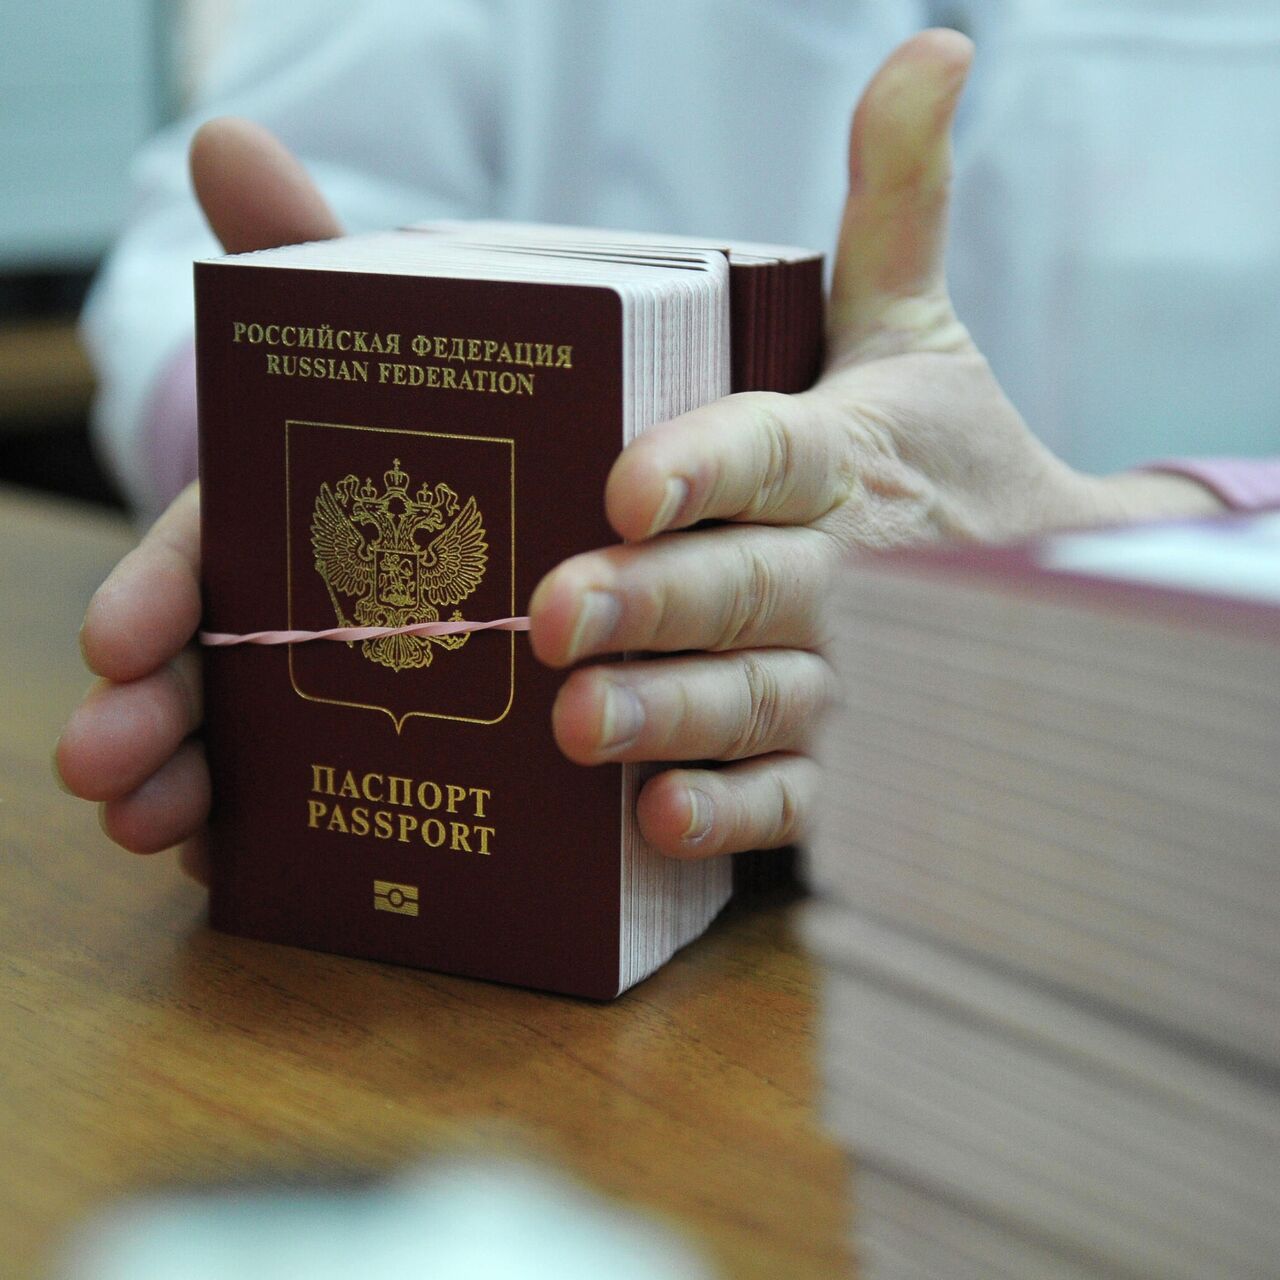 сколько стоит паспорт на 10 лет